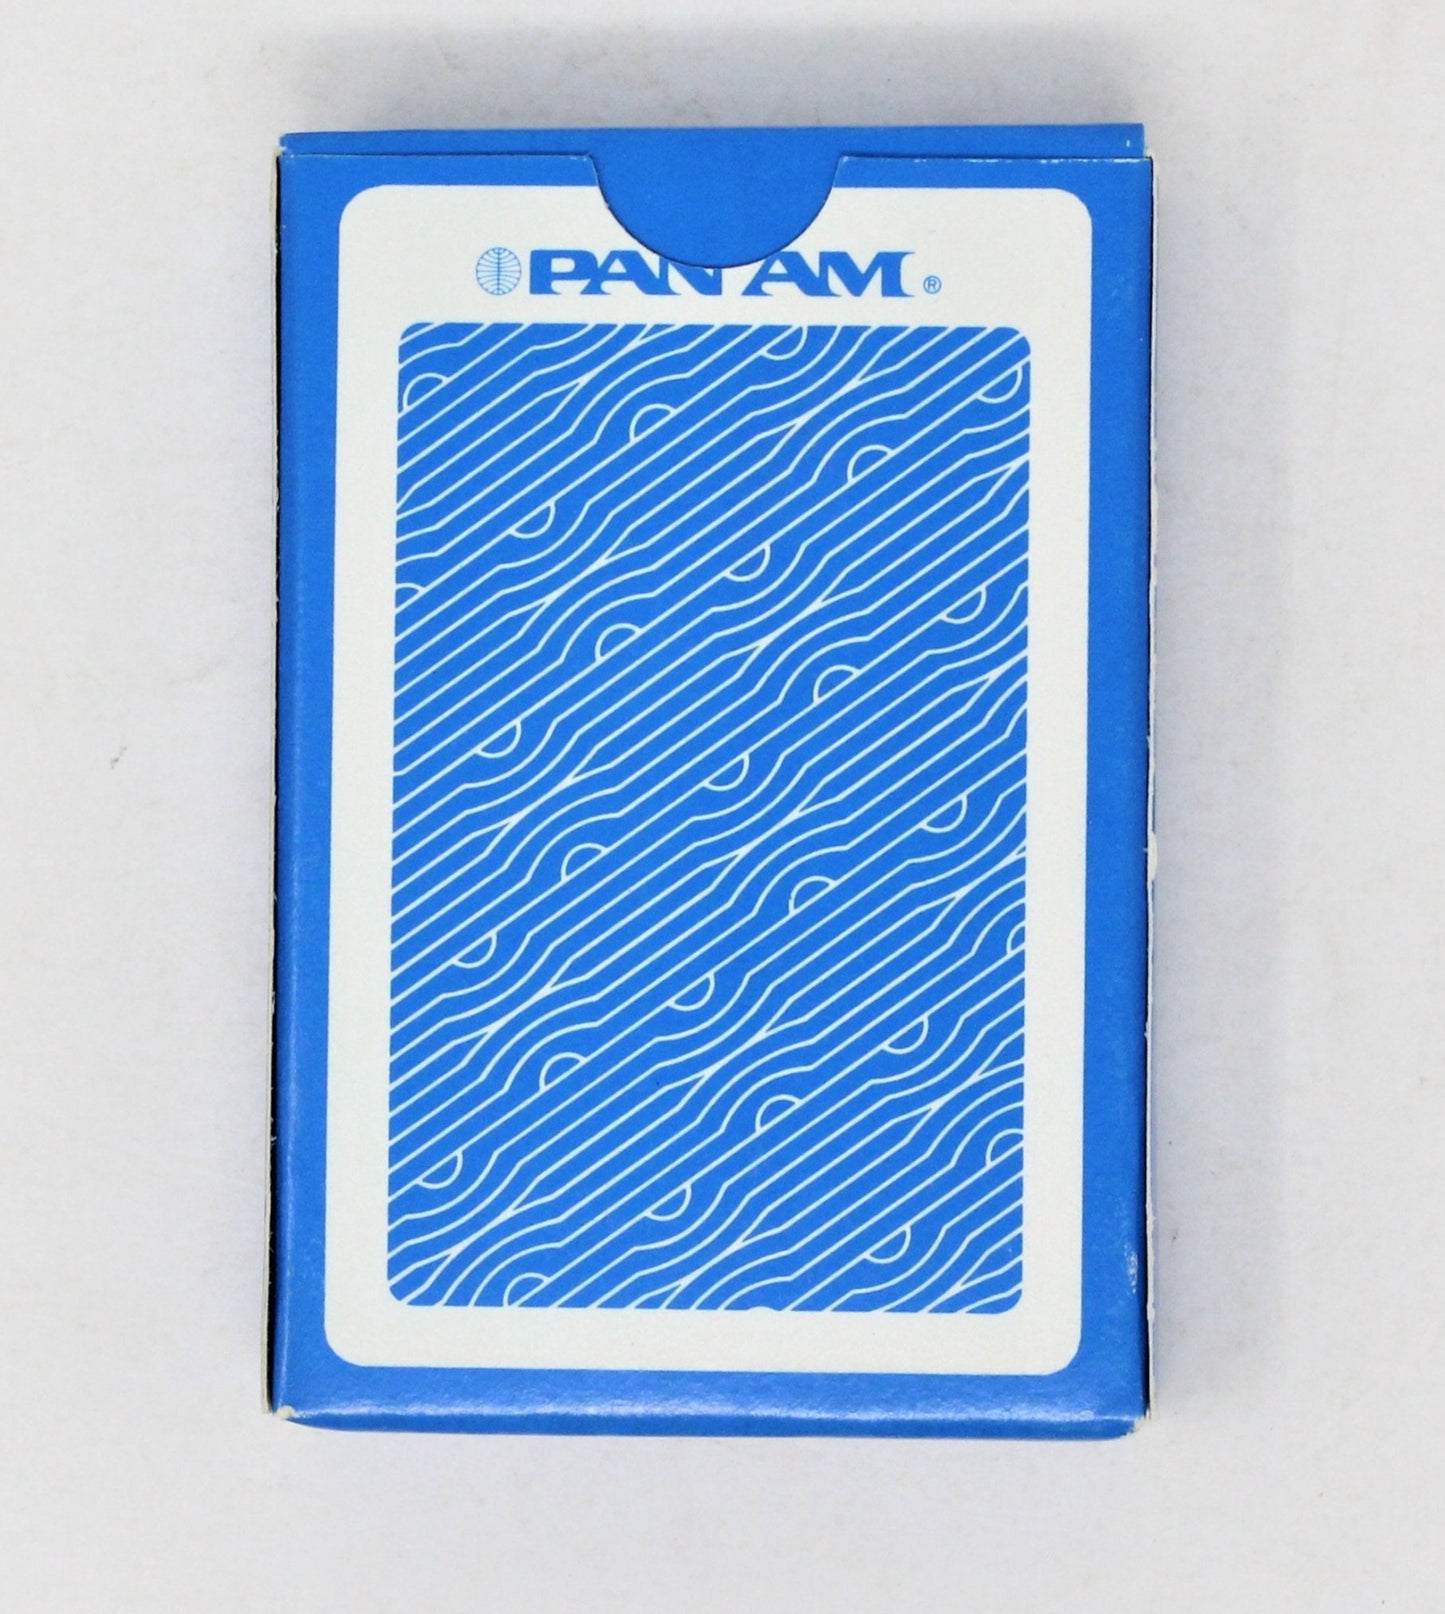 Playing Cards, Pan Am, Bridge Size Trump Cards, Unopened, Vintage